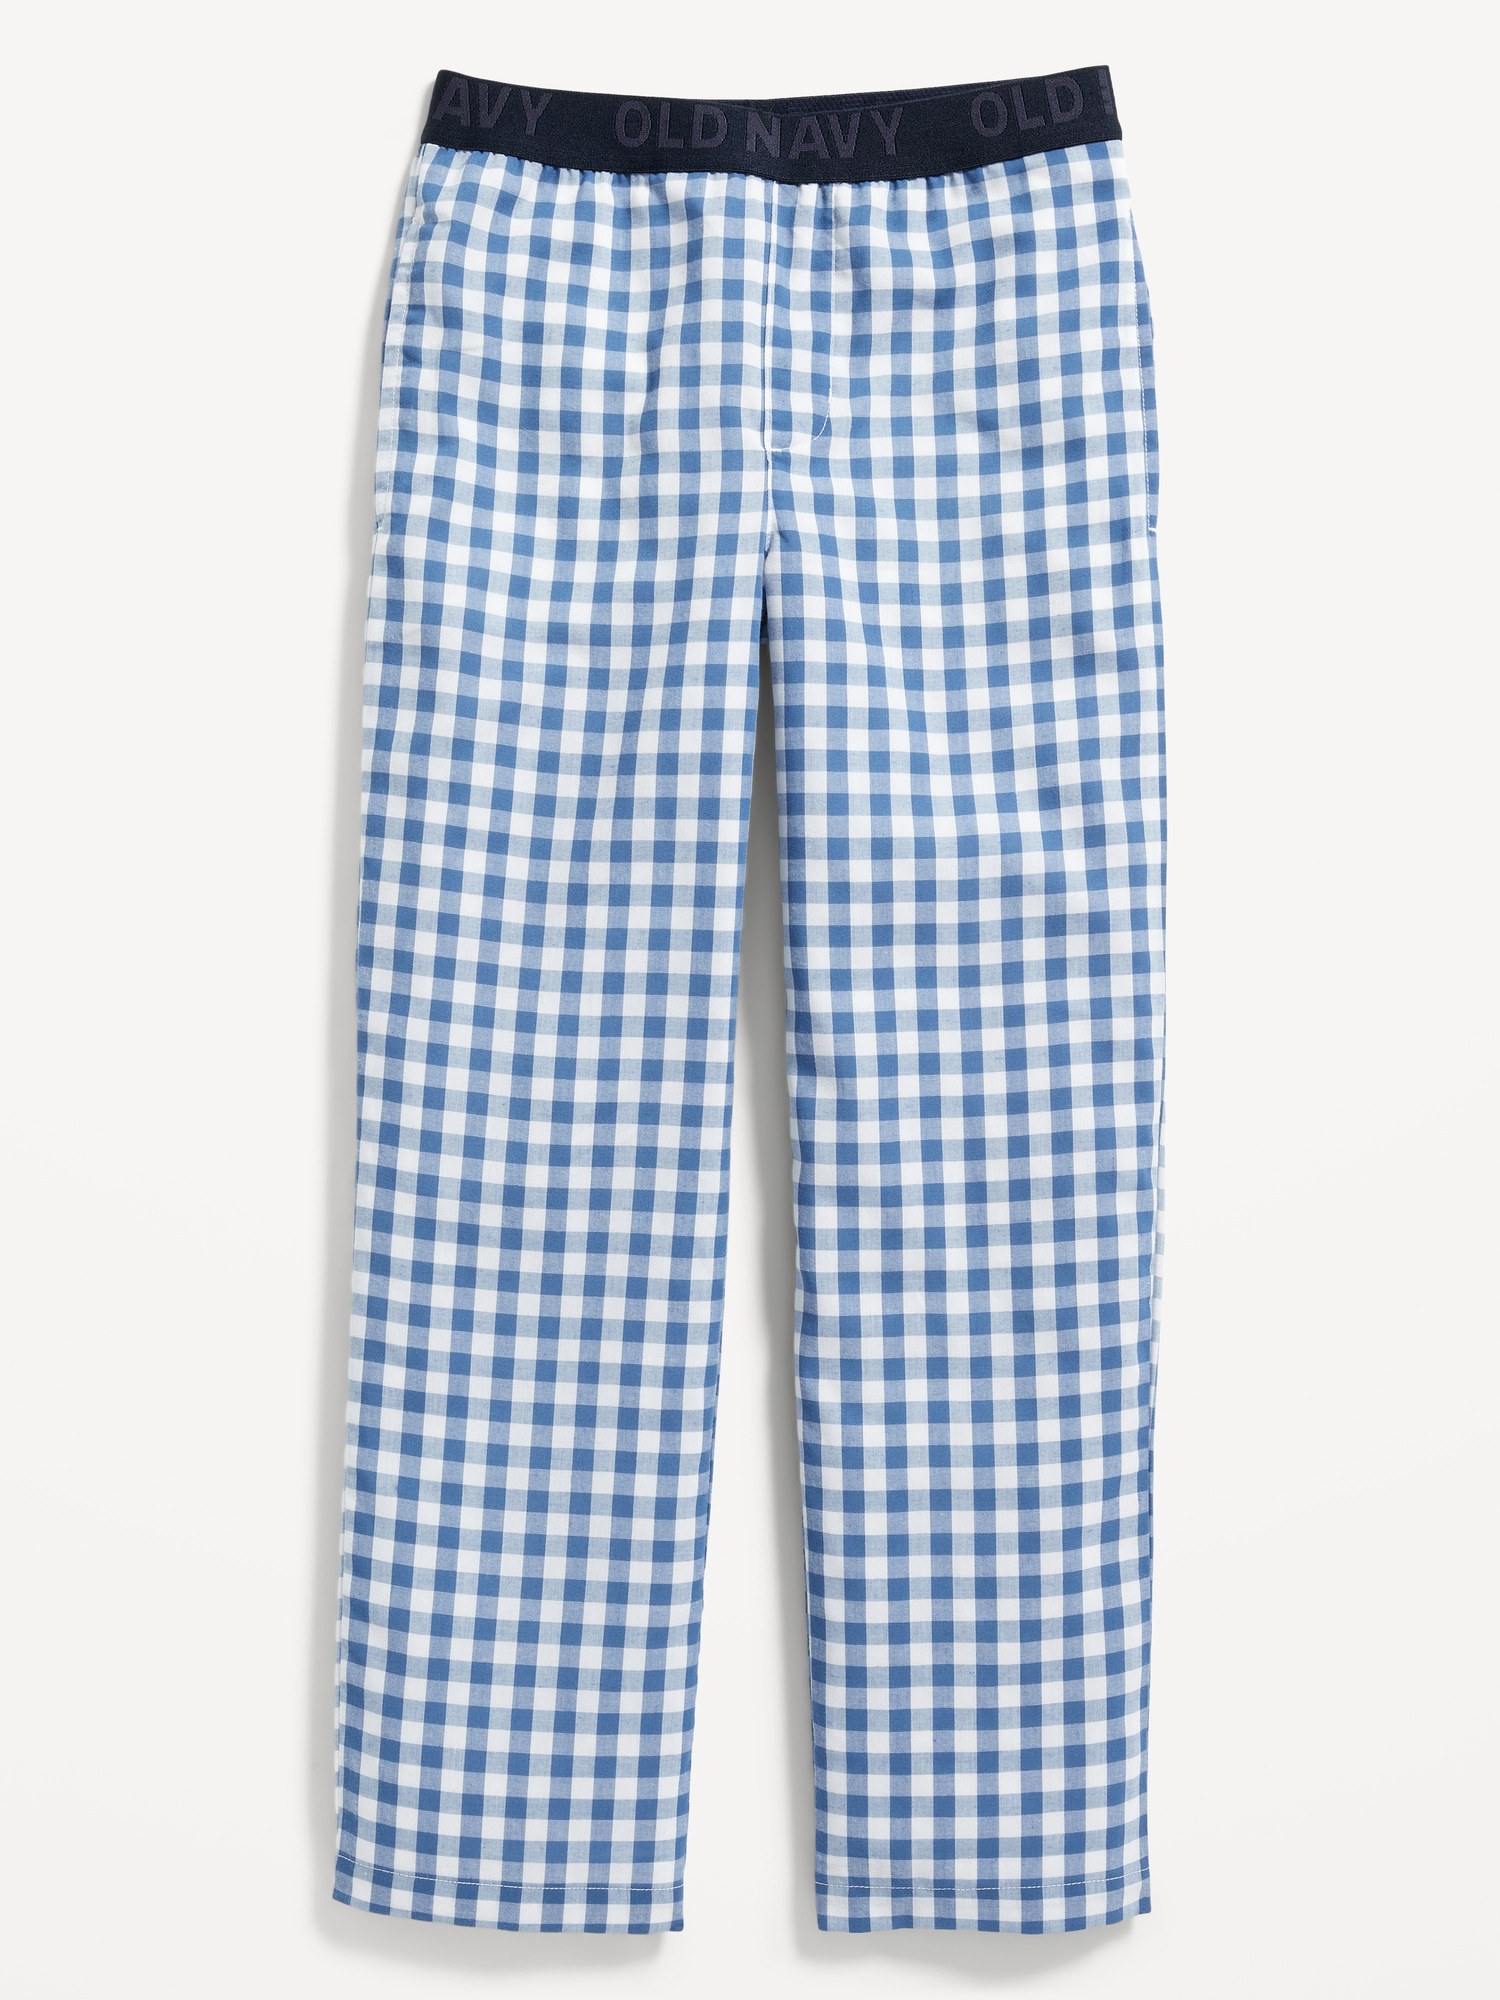 Old Navy Straight Printed Poplin Pajama Pants for Boys multi. 1